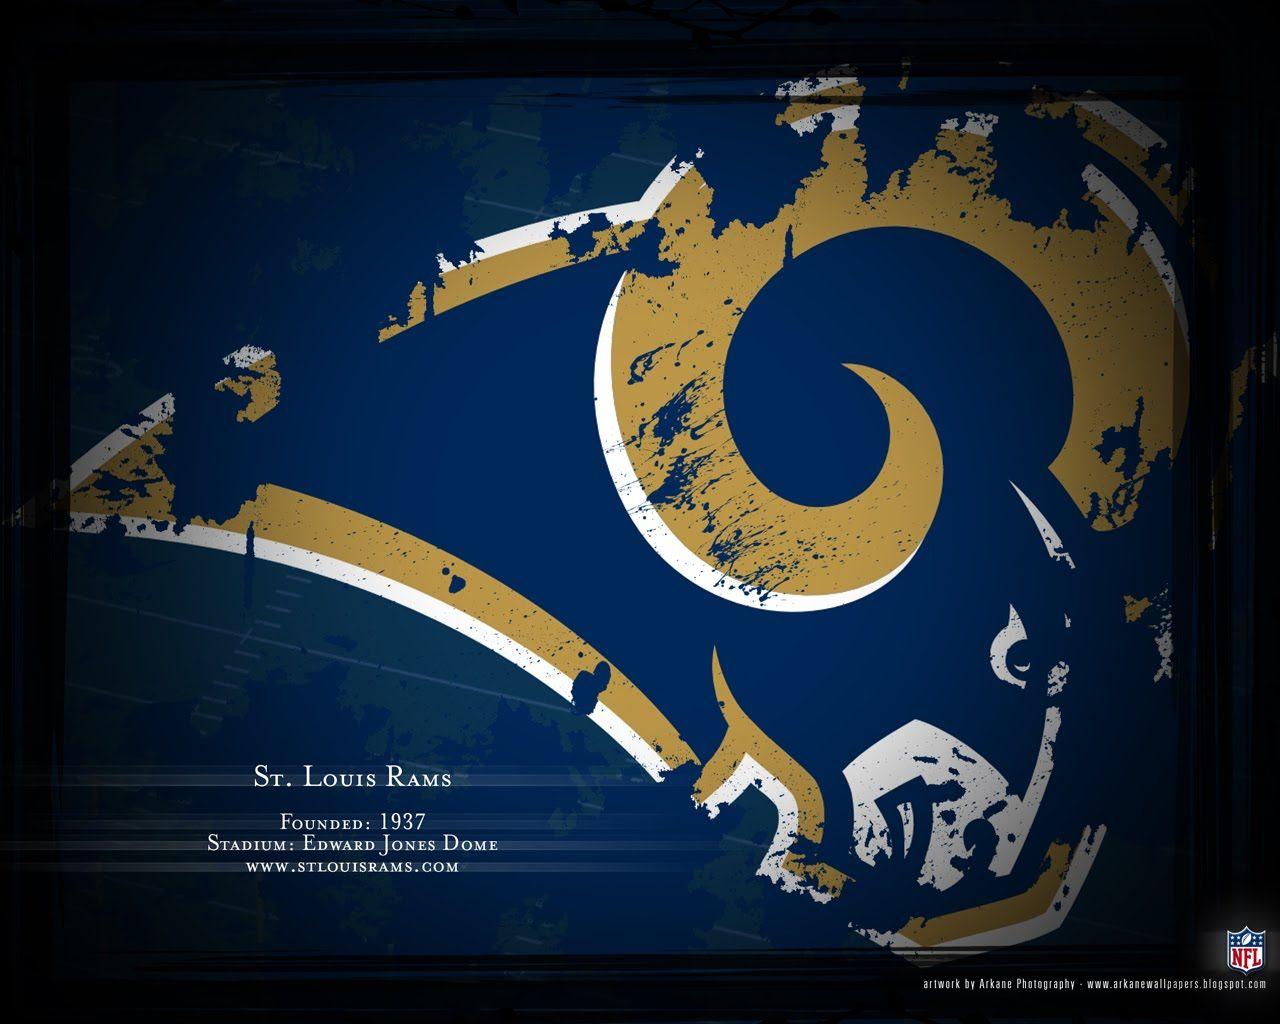 Outstanding St. Louis Rams wallpaper wallpaper. St. Louis Rams